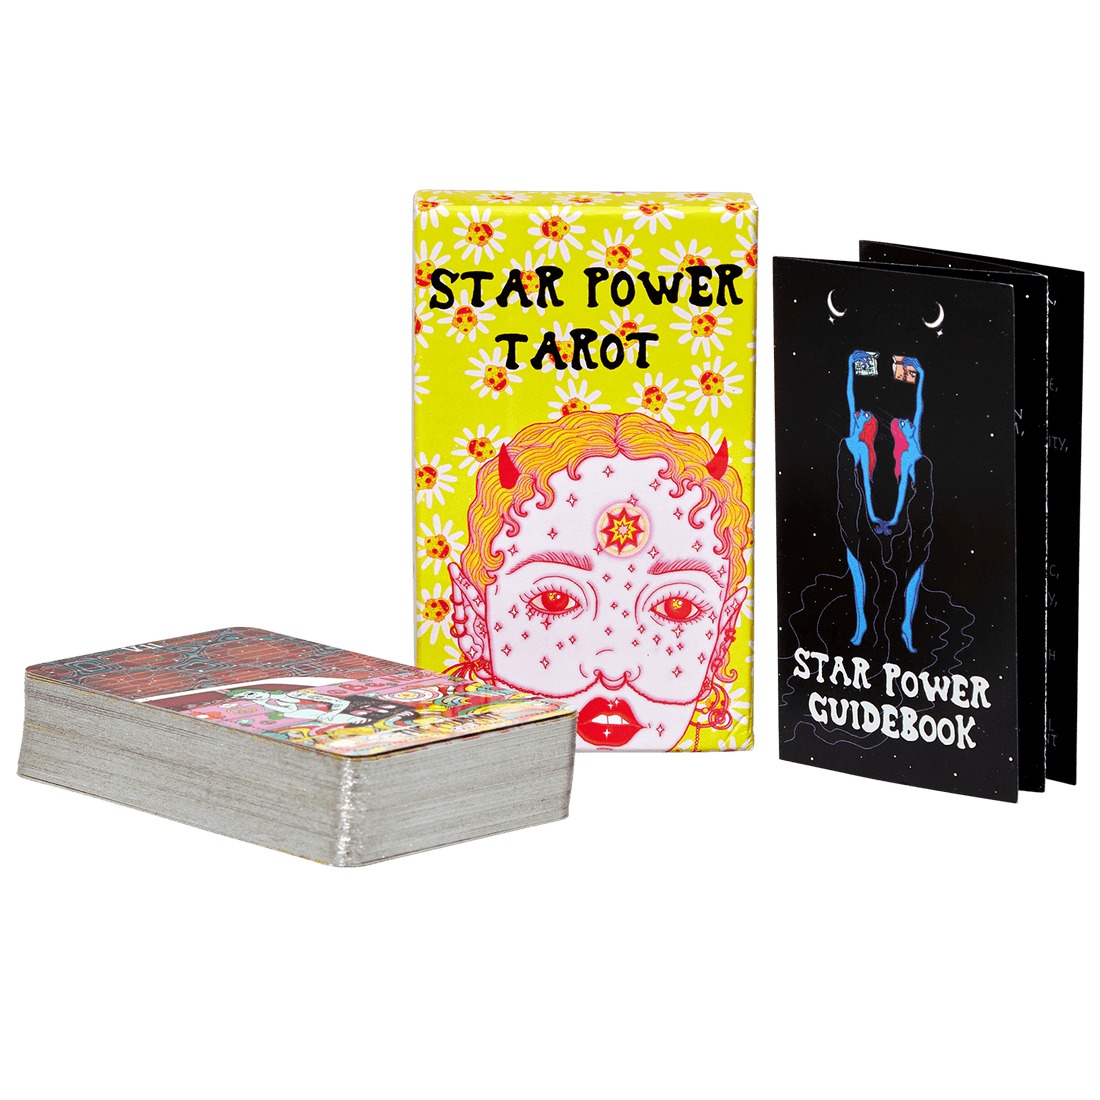 Star Power Tarot